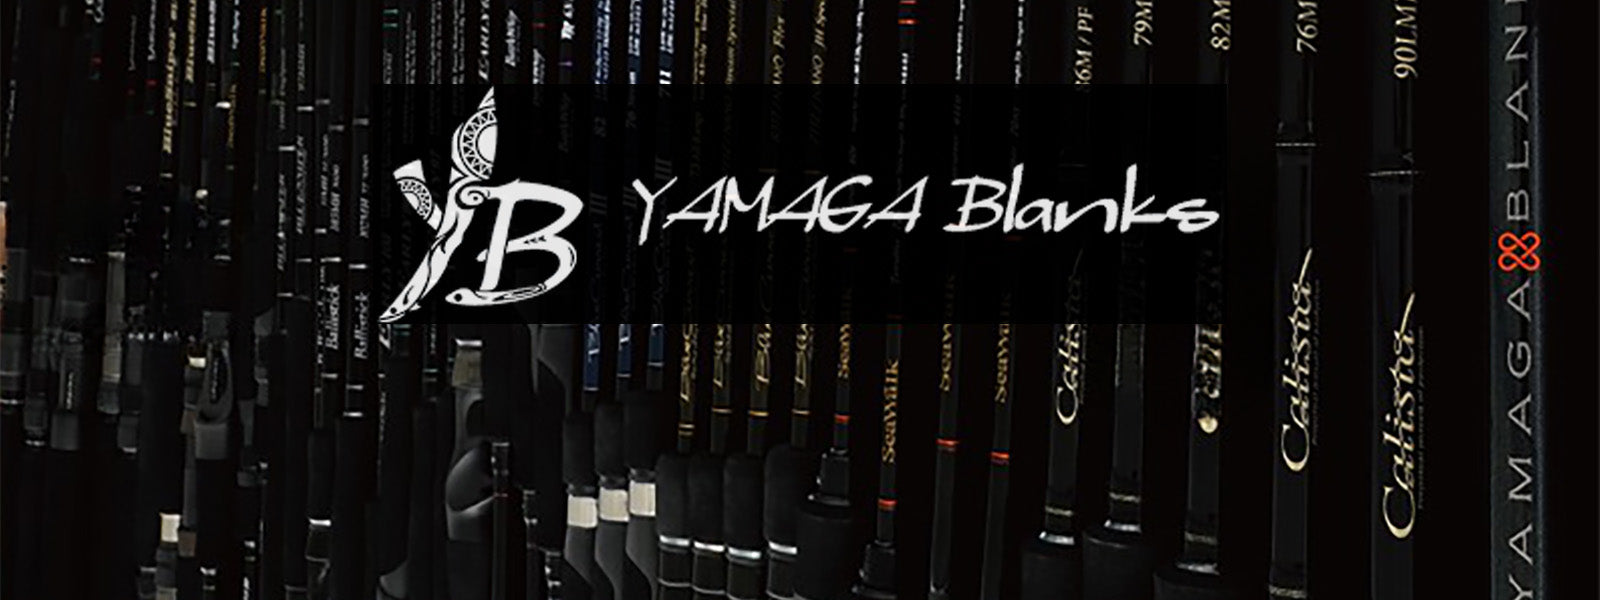 Yamaga Blanks fishing rods made in Japan